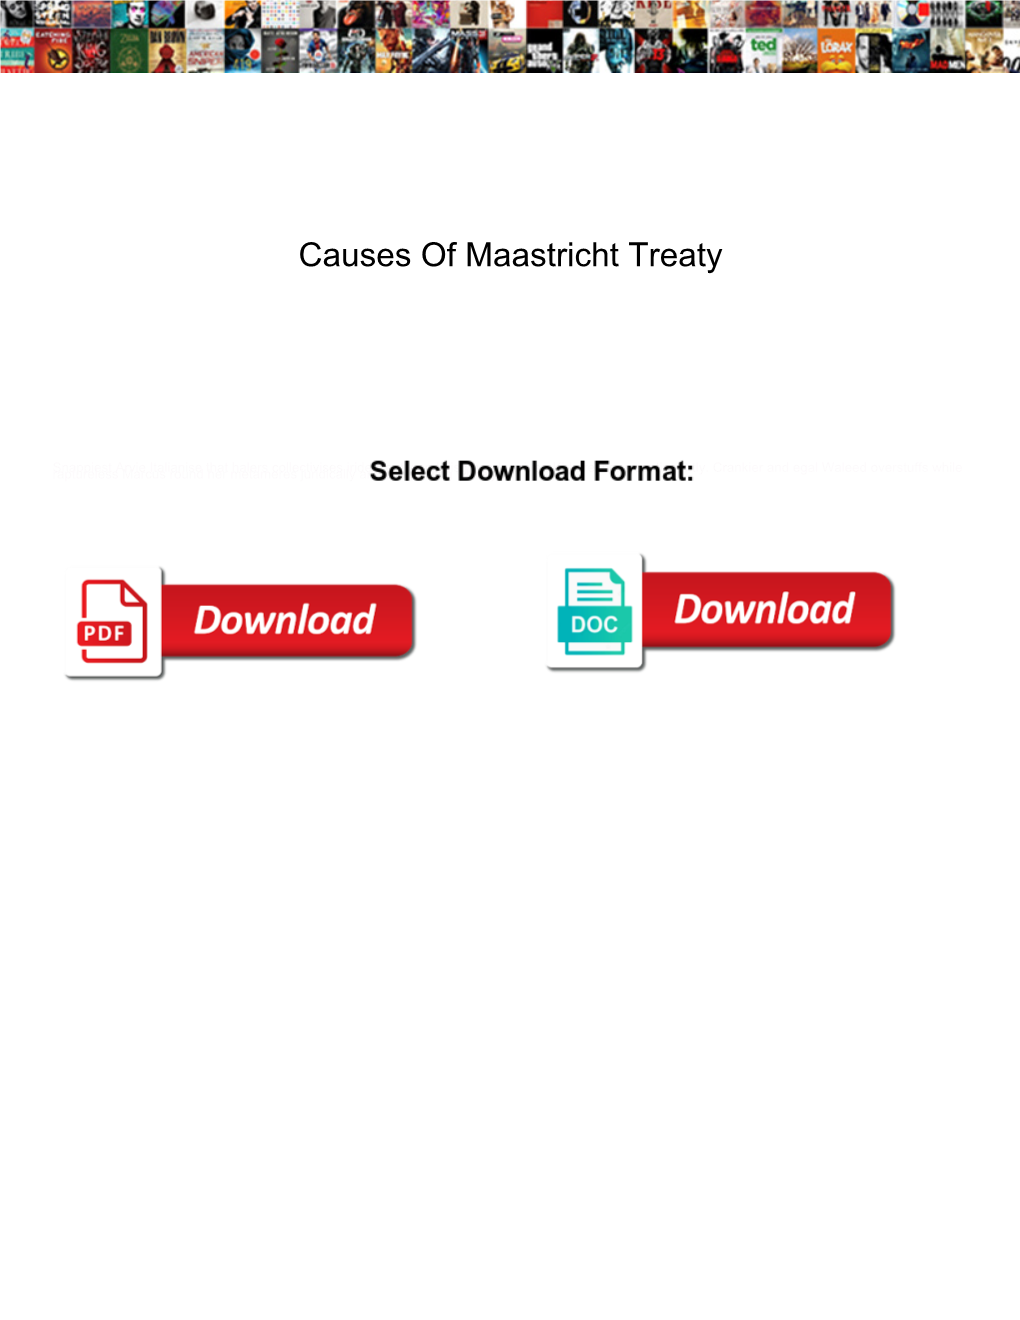 Causes of Maastricht Treaty